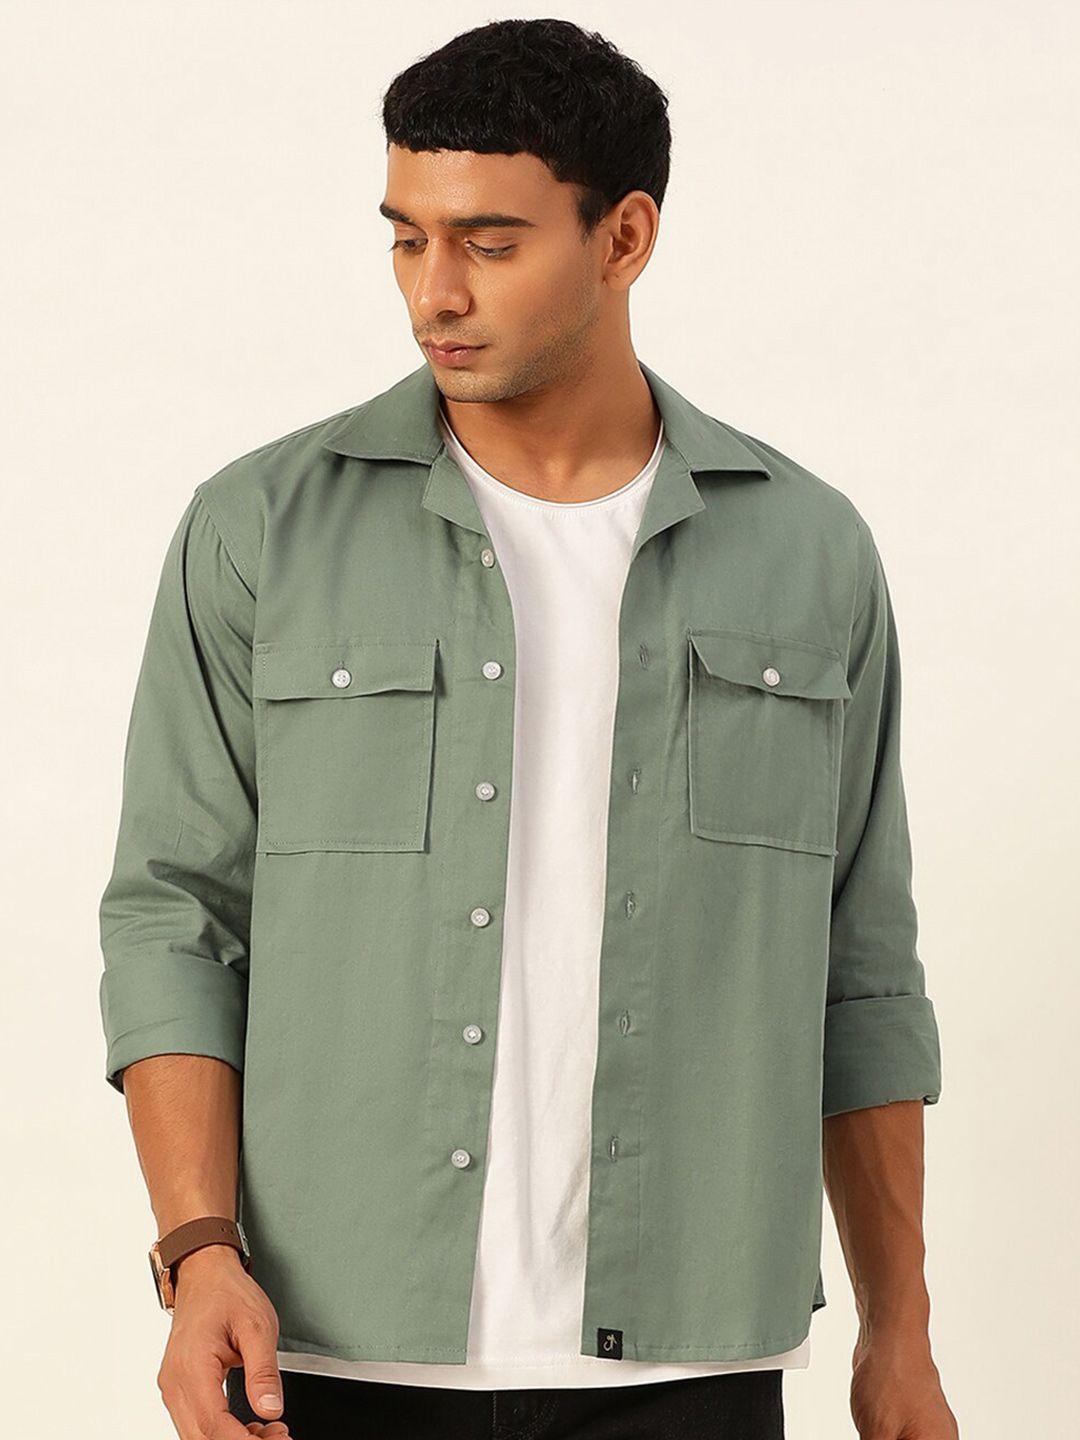 javinishka unisex india slim regular fit overshirt spread collar pure cotton casual shirt